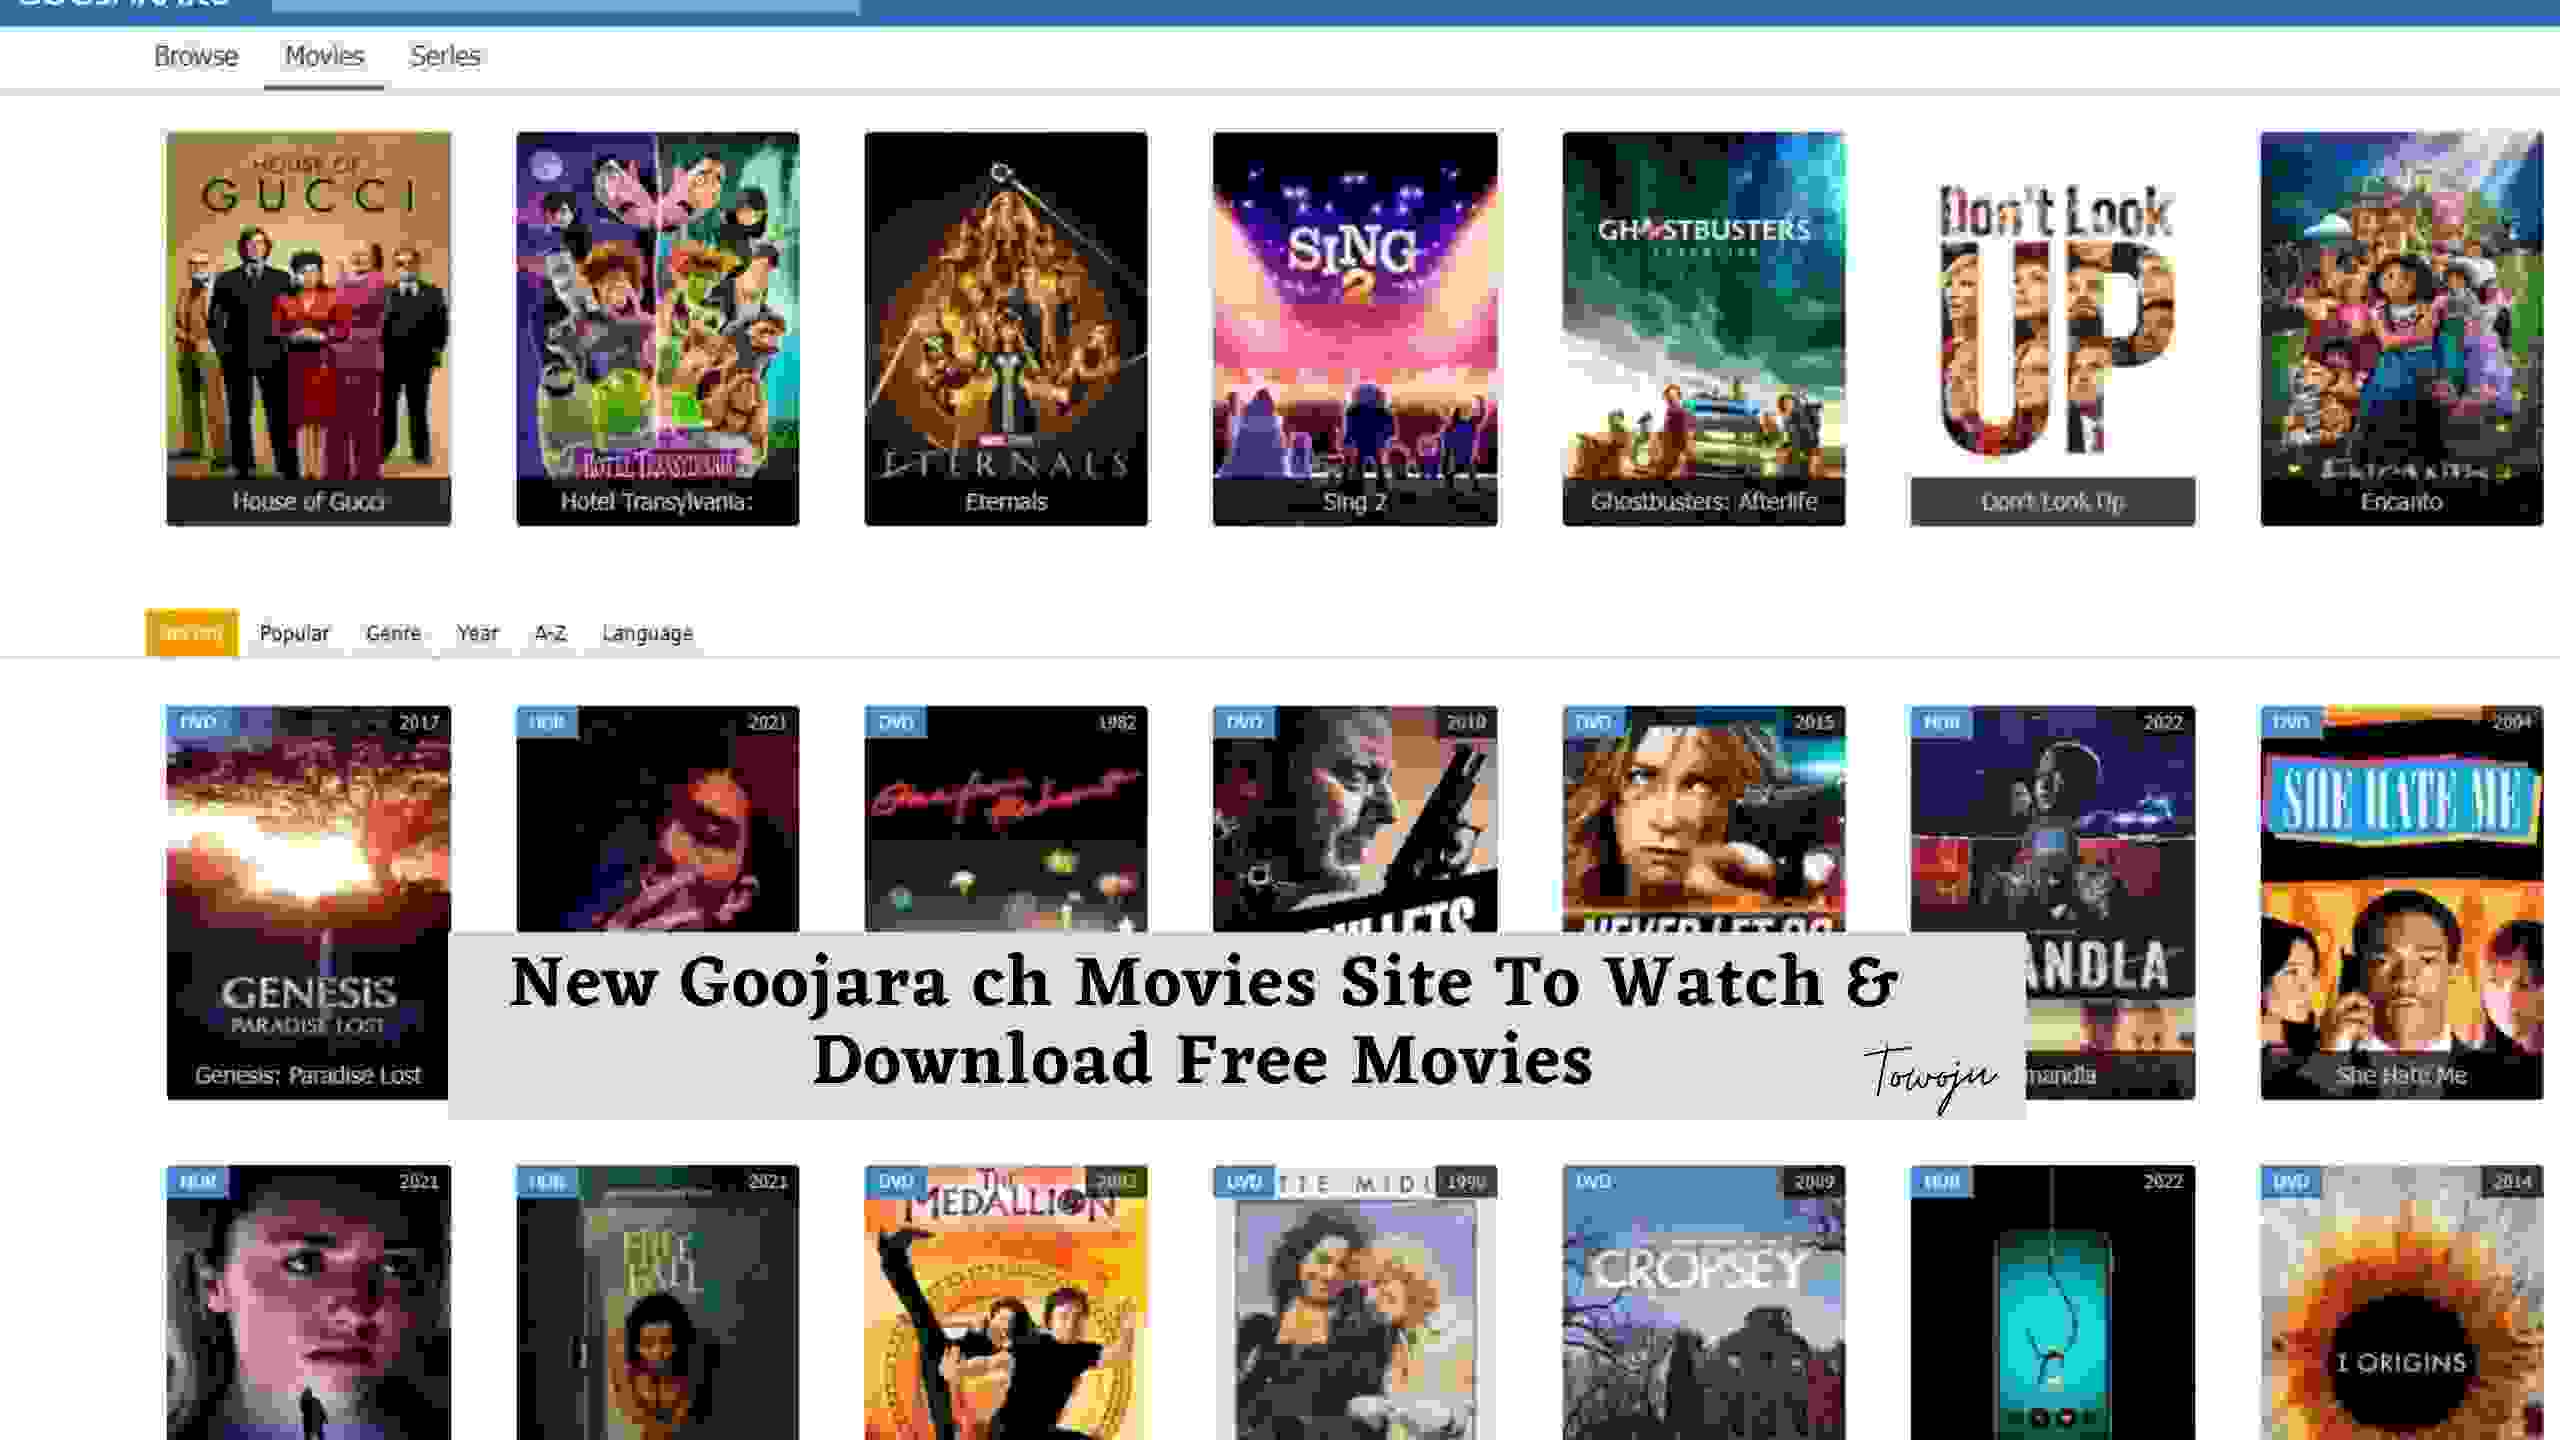 New Goojara ch Movies Site To Watch & Download Free Movies